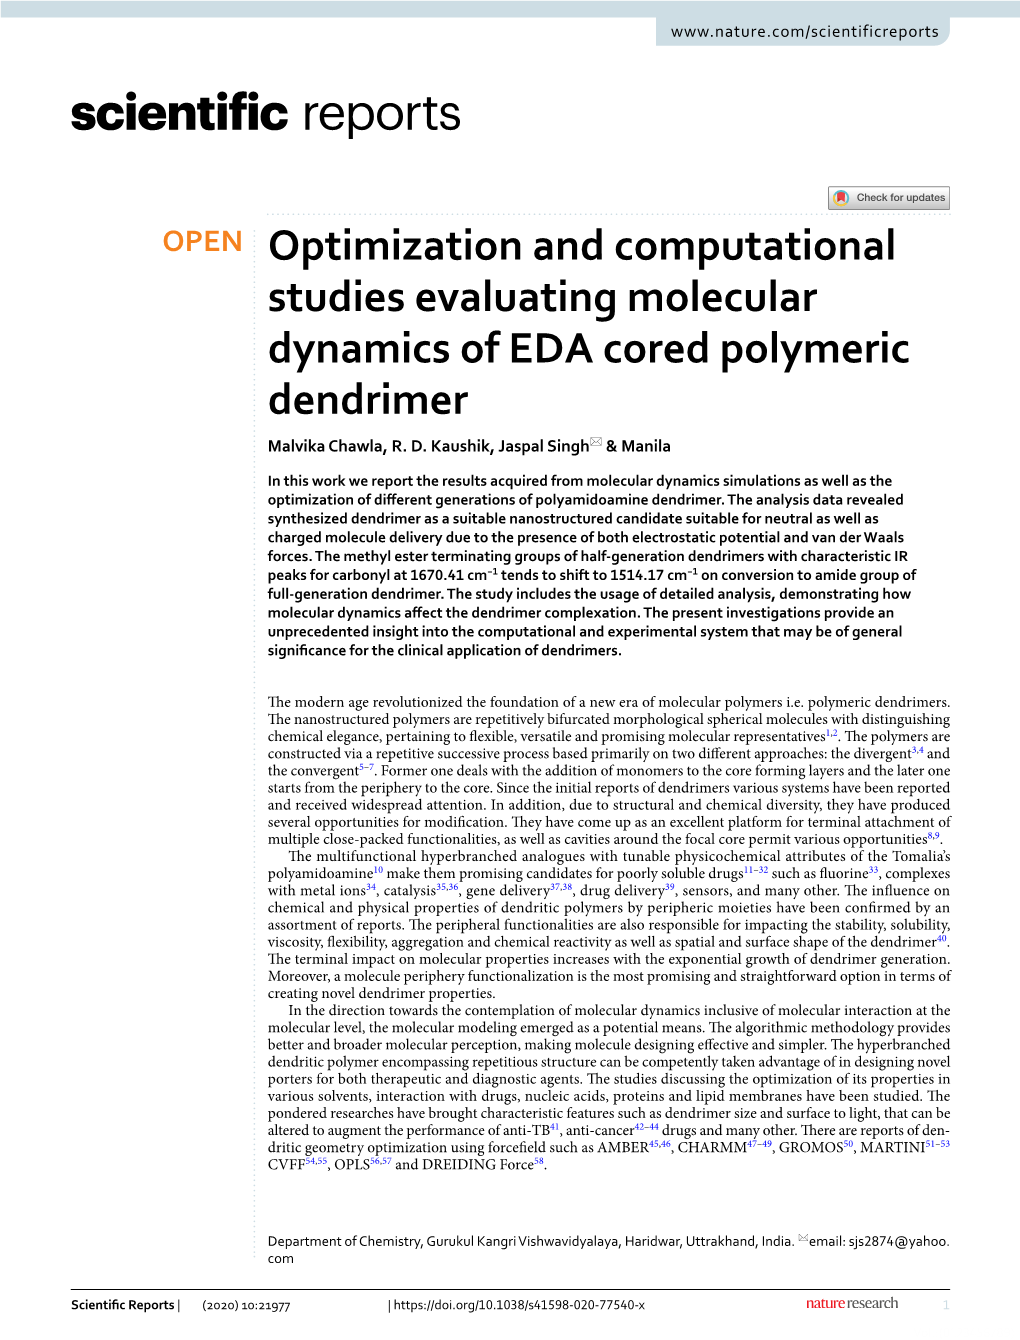 Optimization and Computational Studies Evaluating Molecular Dynamics of EDA Cored Polymeric Dendrimer Malvika Chawla, R